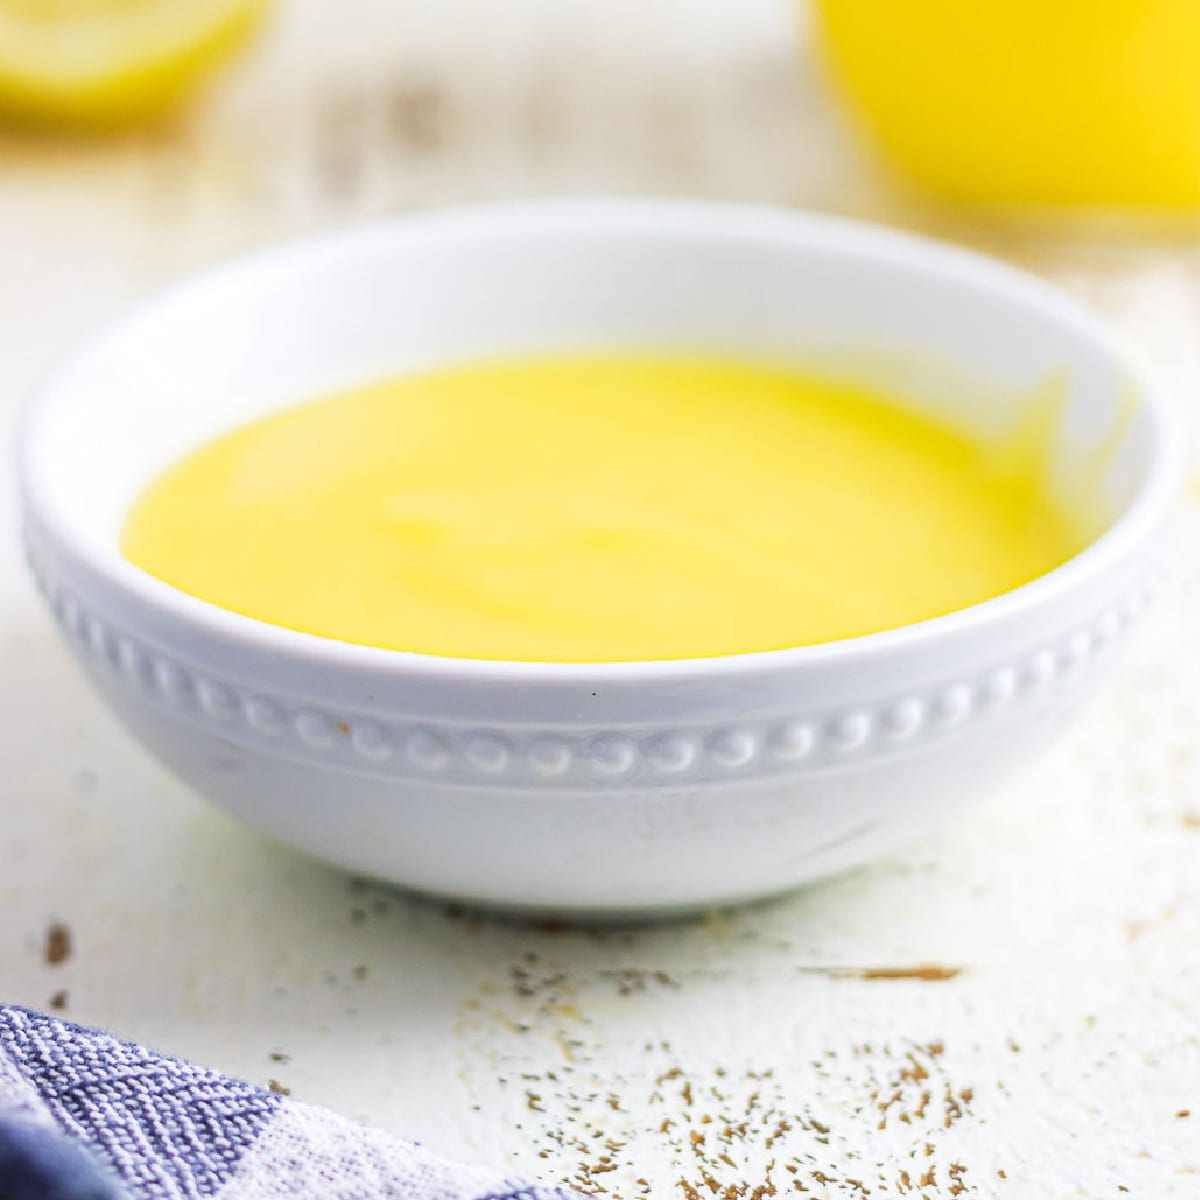 A bowl of lemon curd on a table.